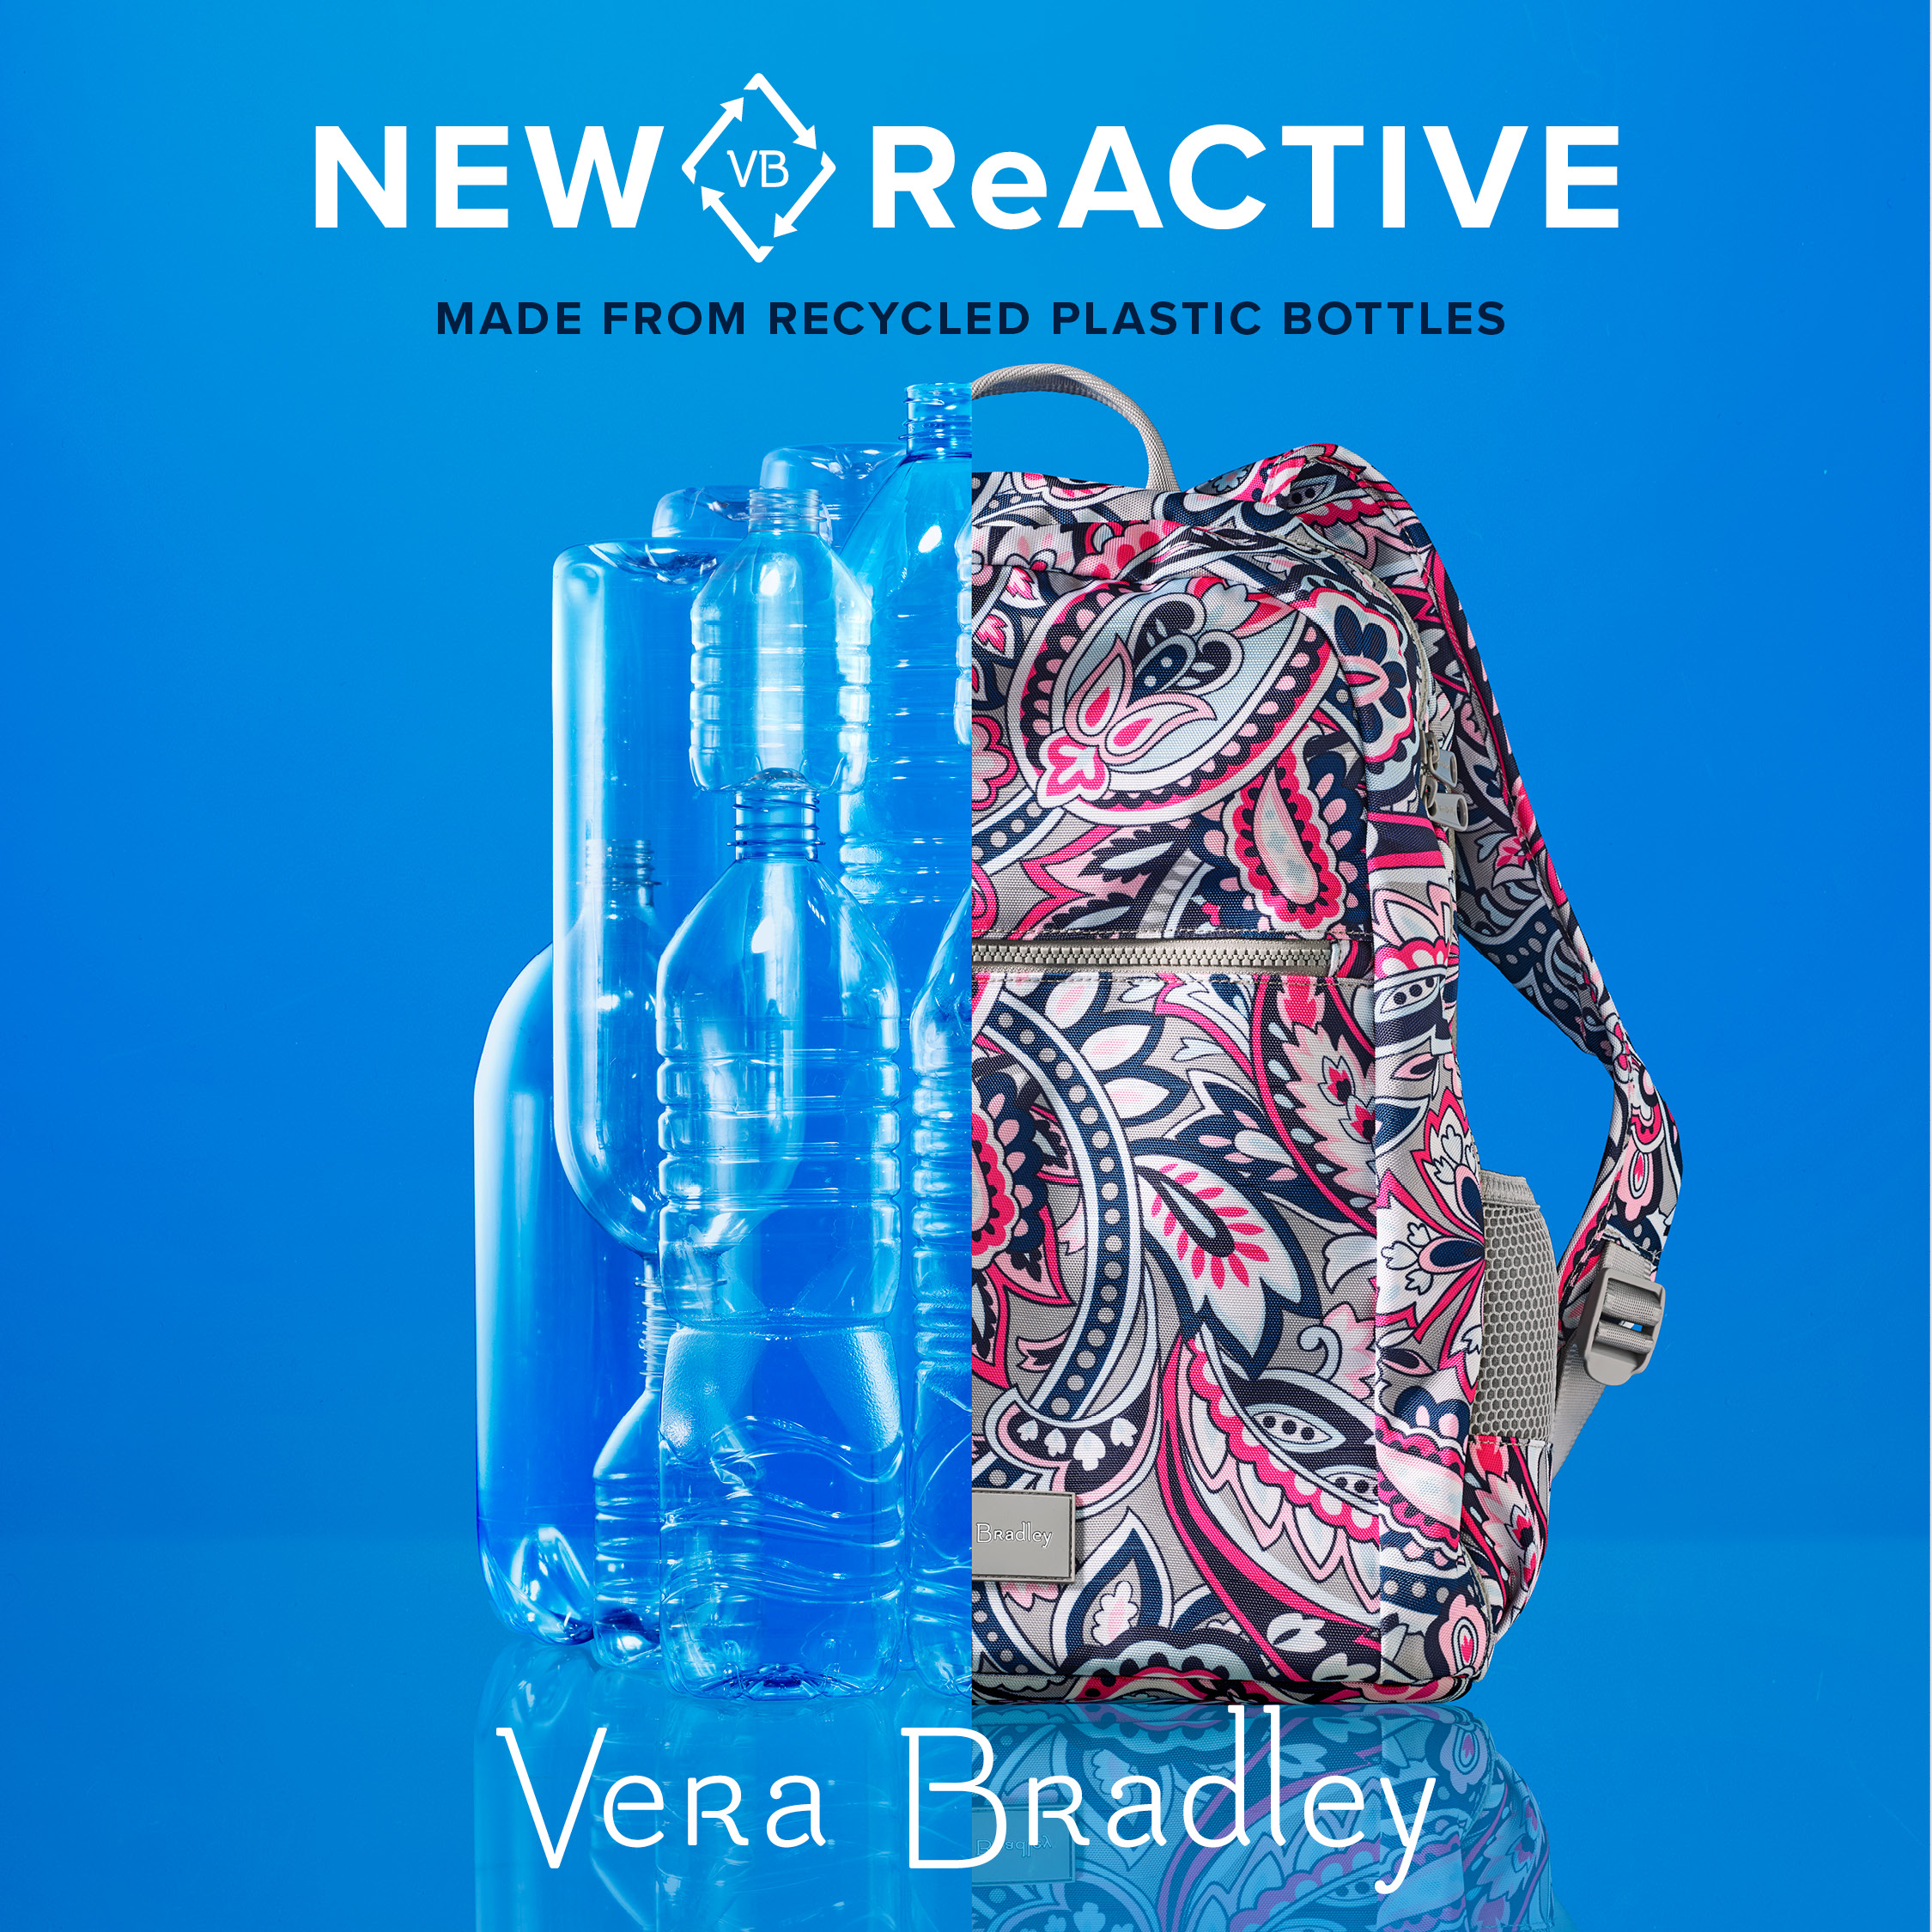 Vera Bradley ReActive Material